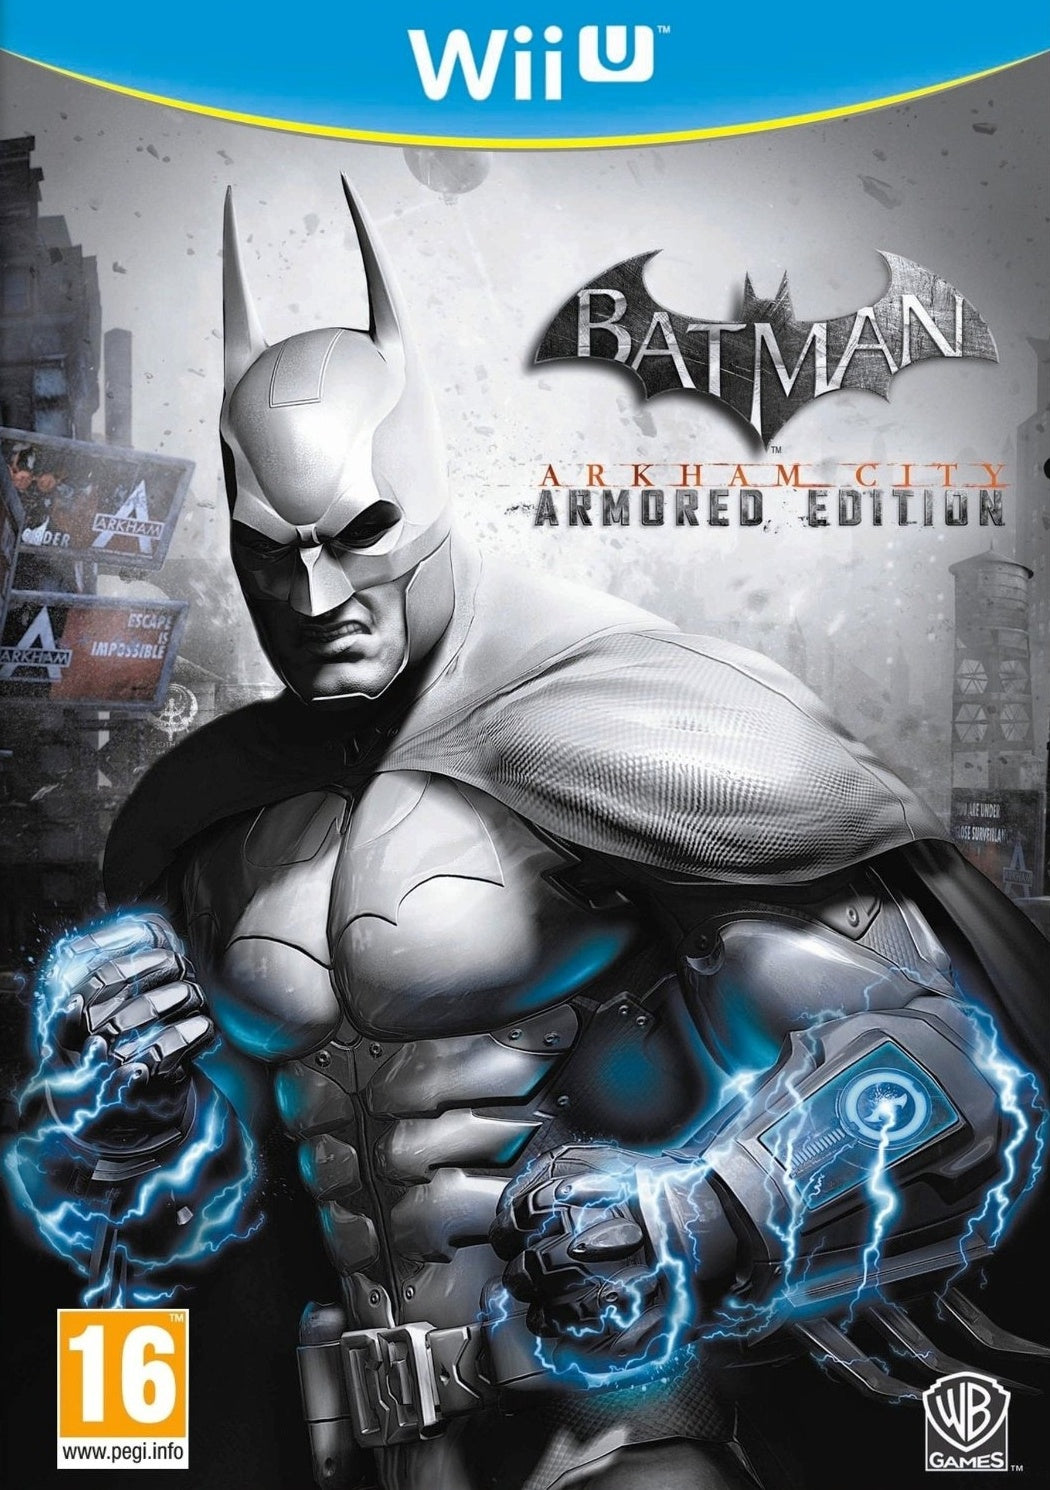 Batman: Arkham City Armored Edition - Wii U (Pre-owned)